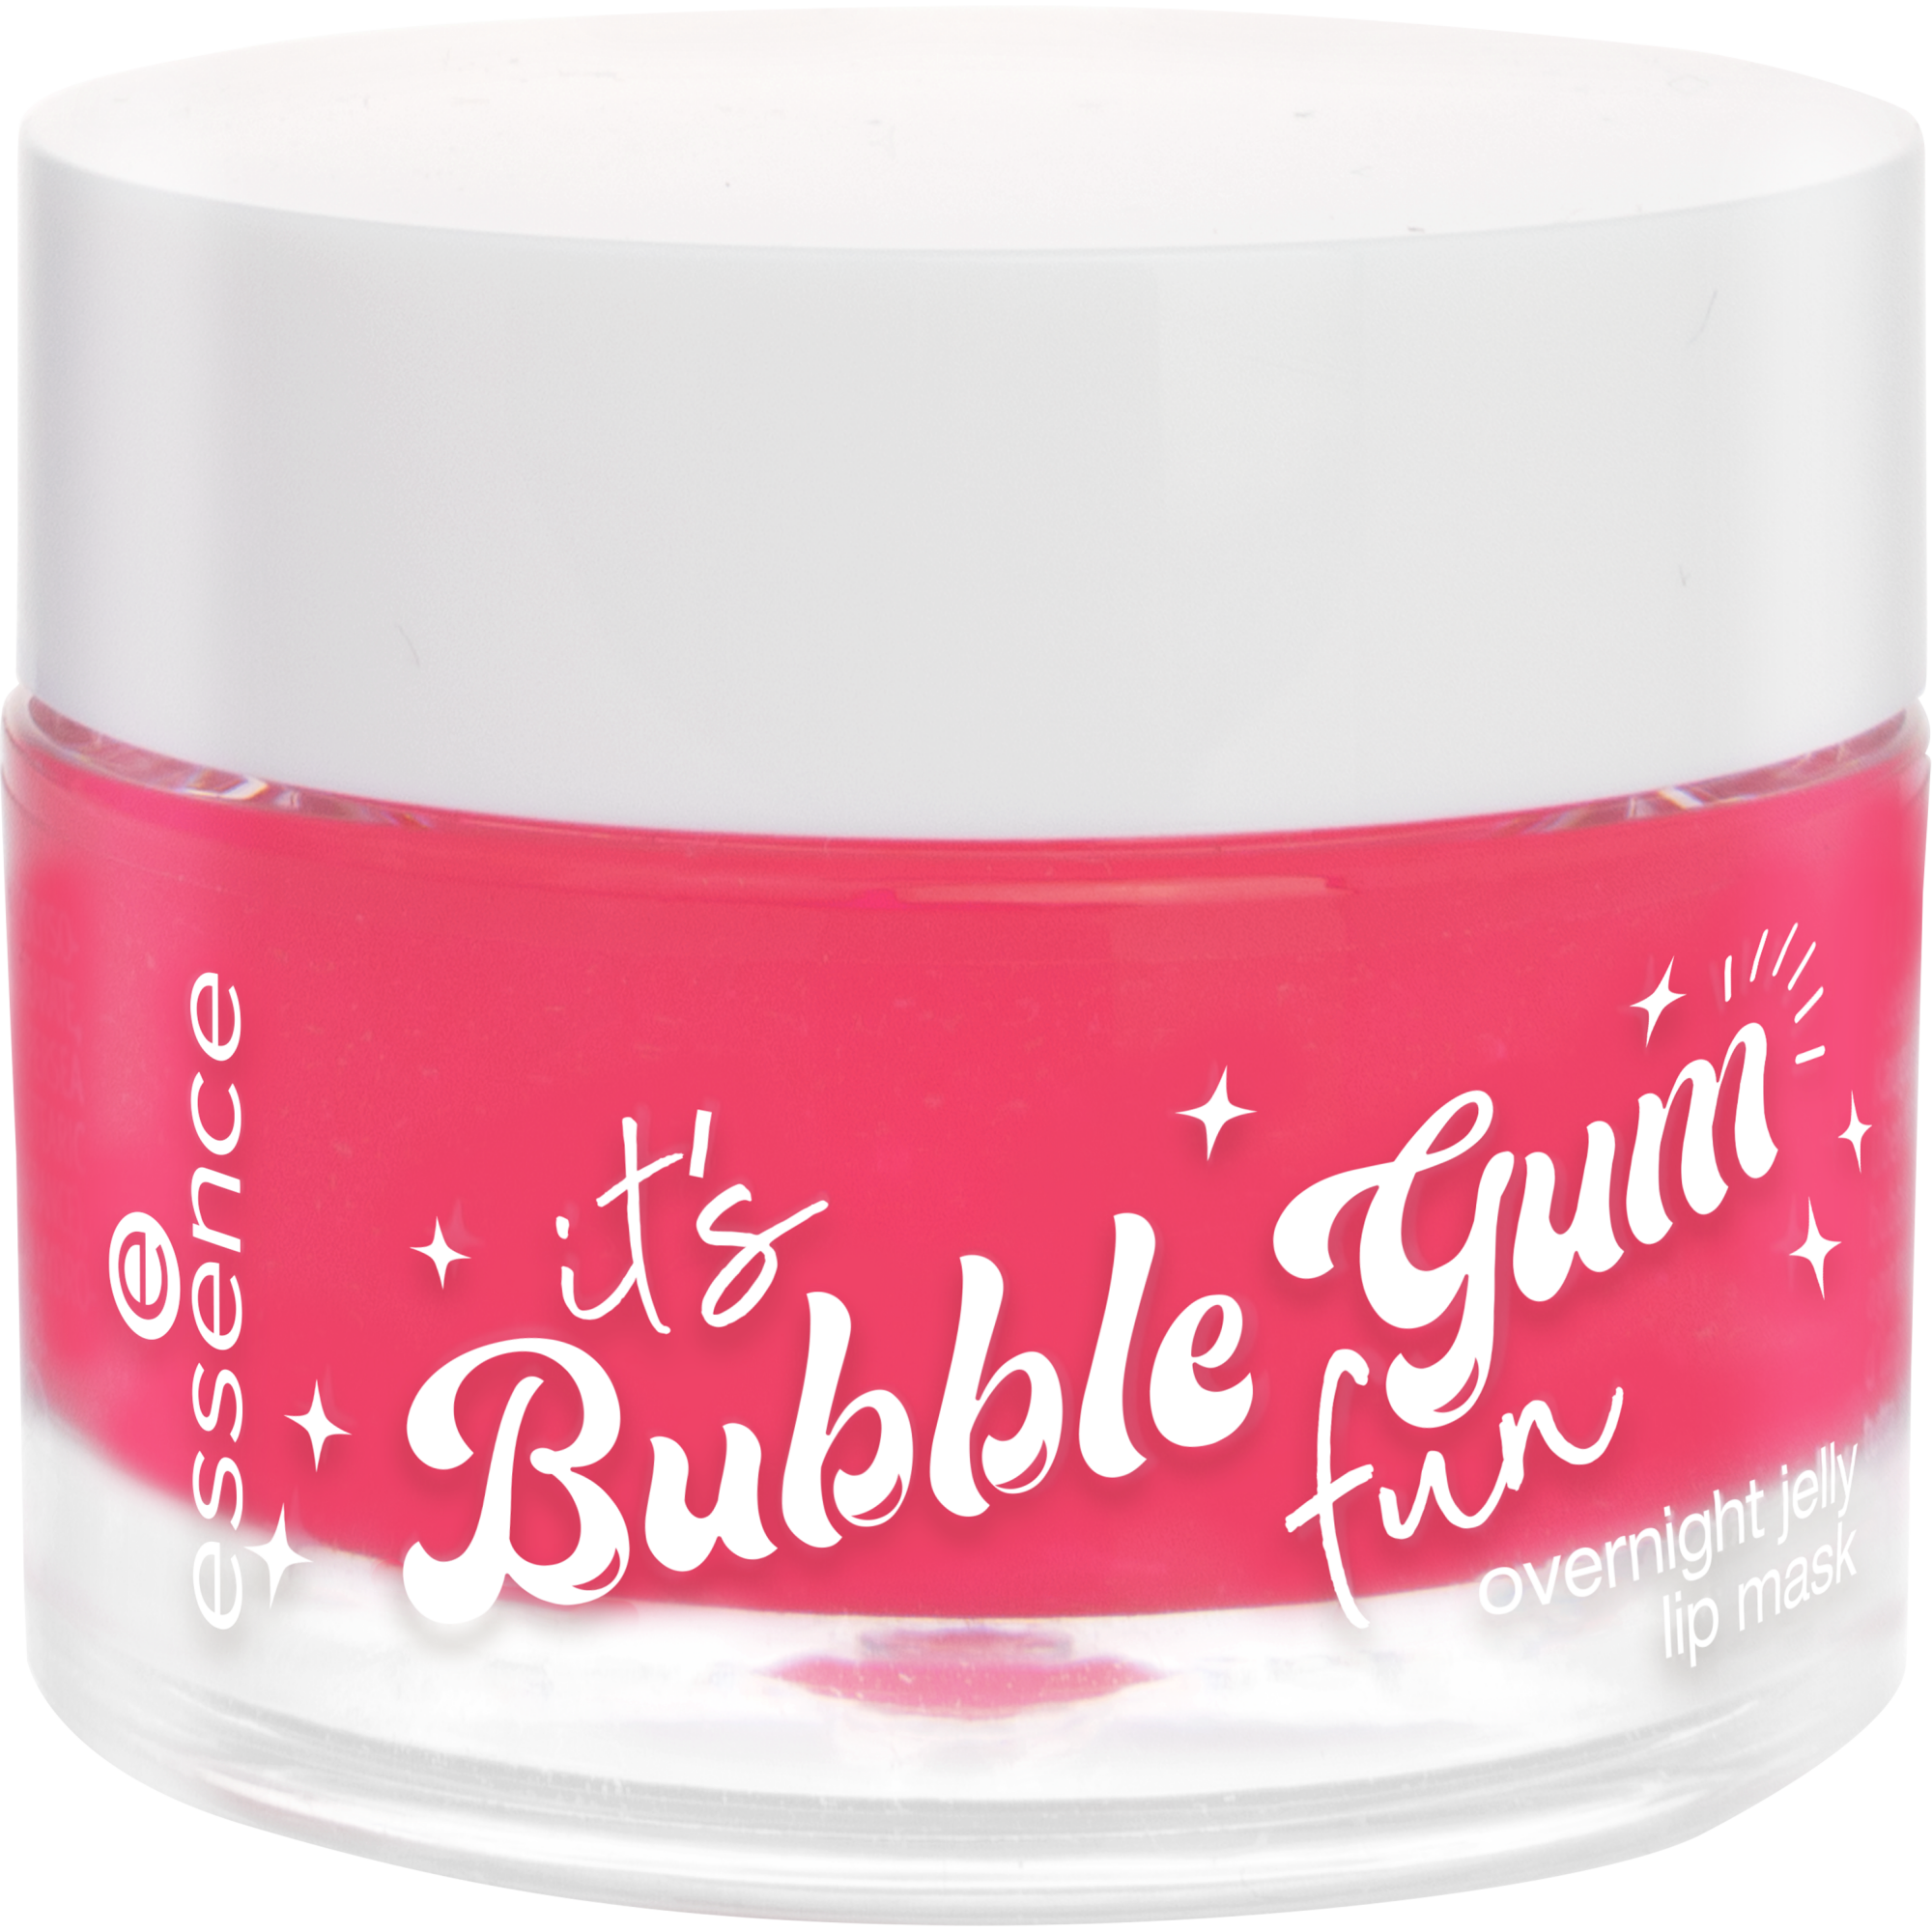 it’s Bubble Gum fun jelly lipmasker voor ‘s nachts